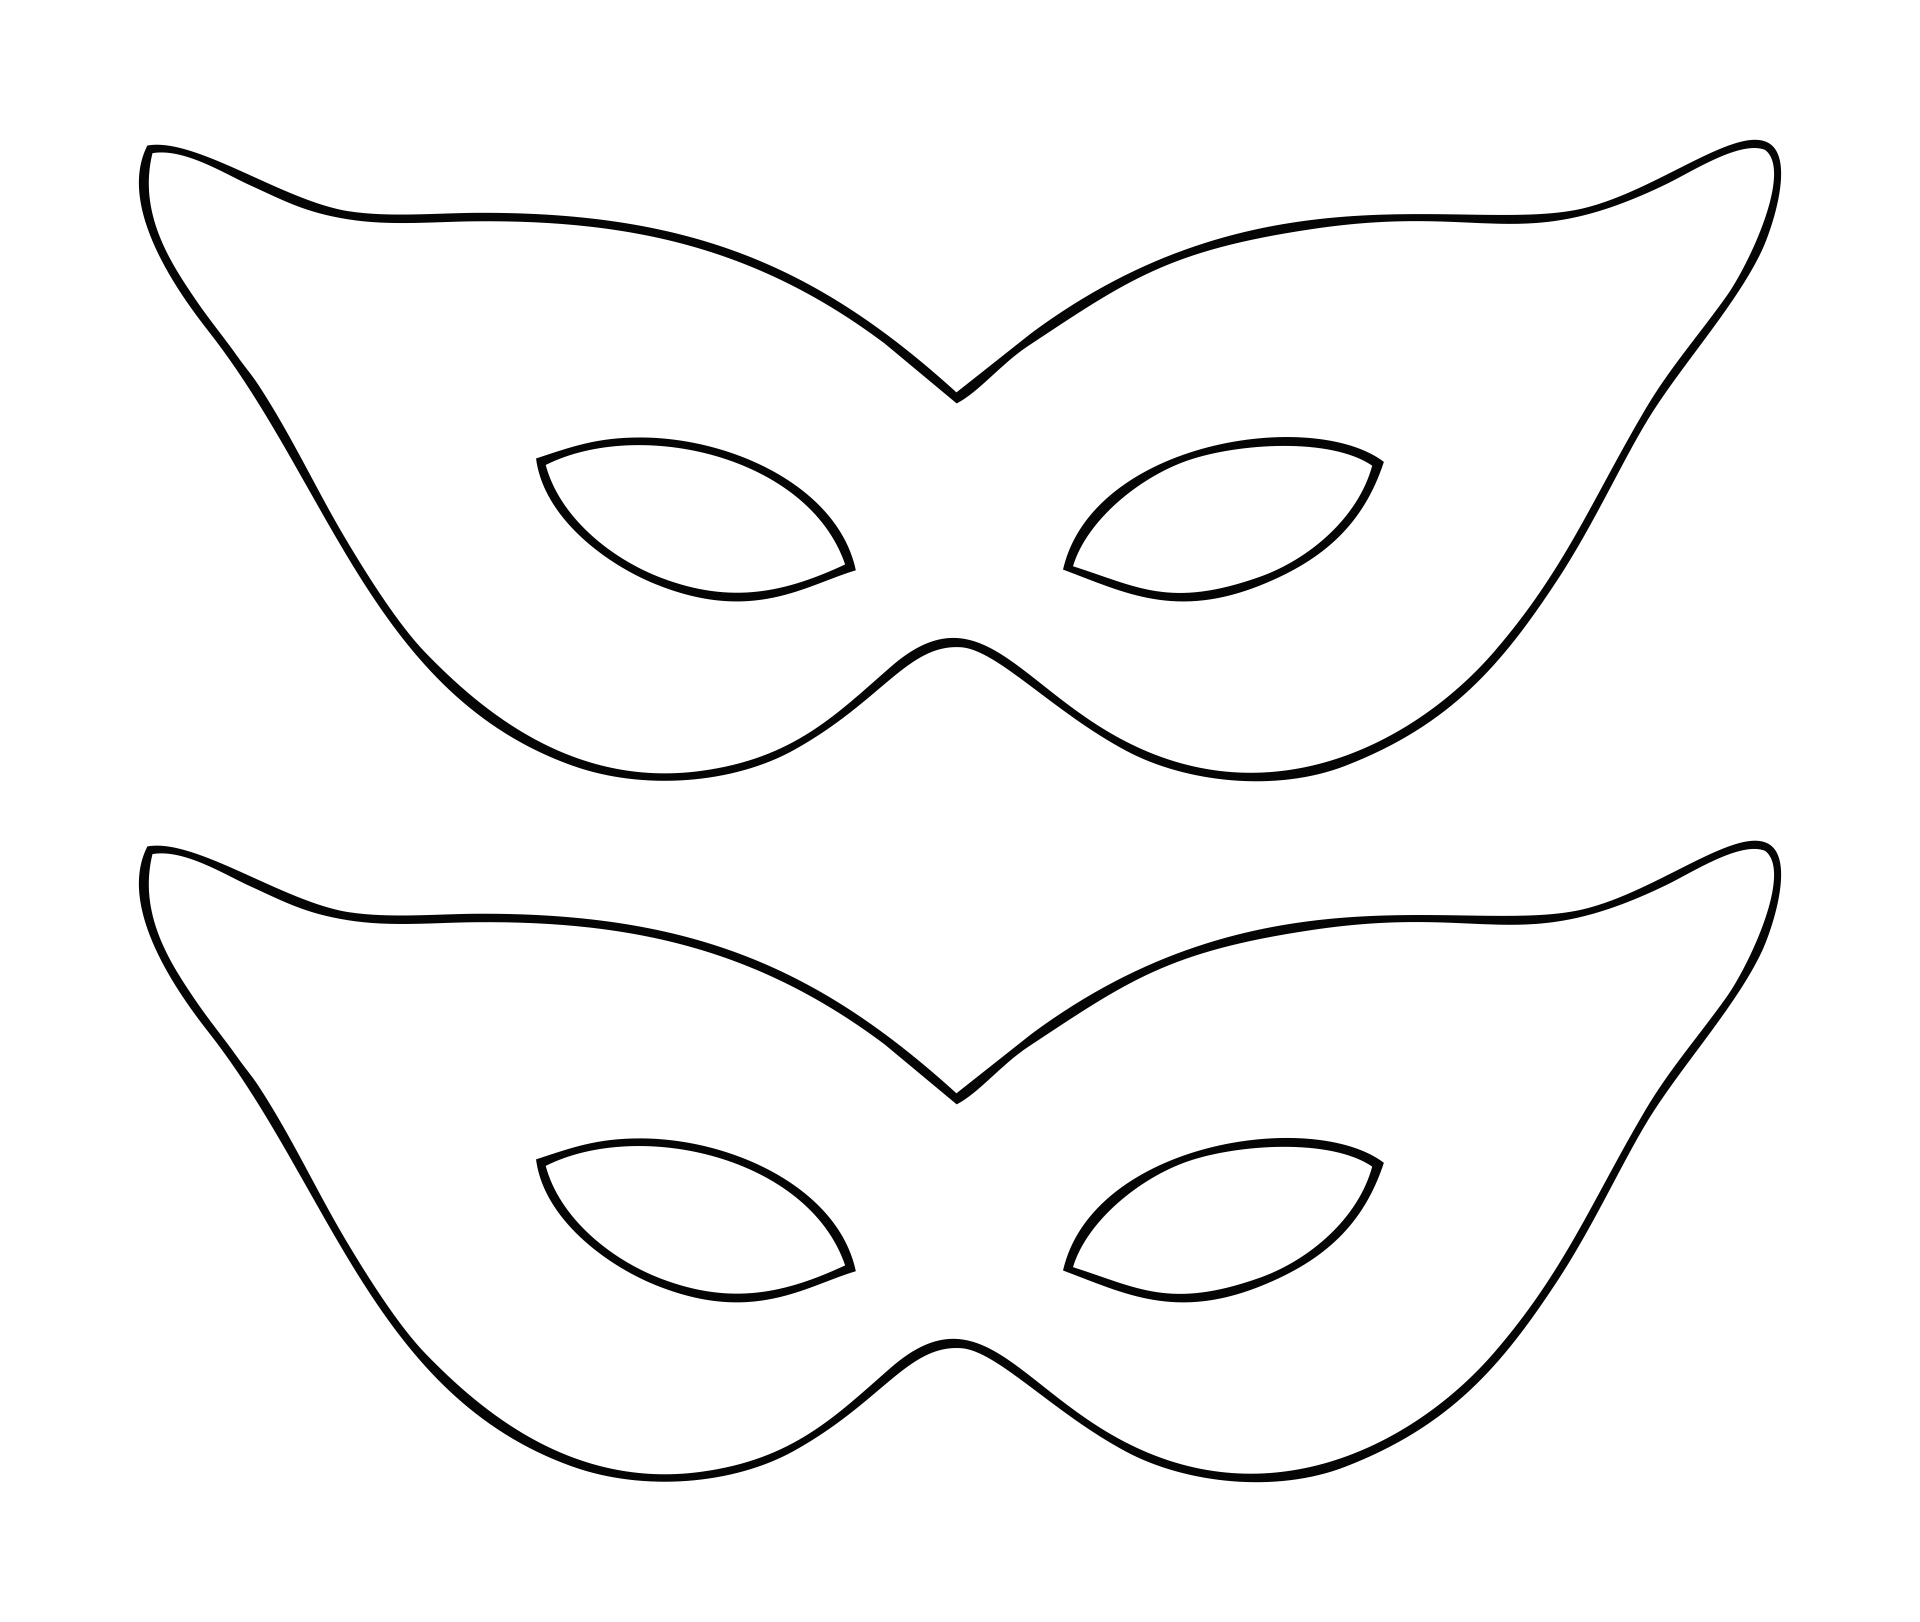 Шаблон маски на 1 апреля. Карнавальные маски шаблоны для печати. Трафарет маски для лица. Карнавальная маска шаблон. Трафарет маскарадной маски.